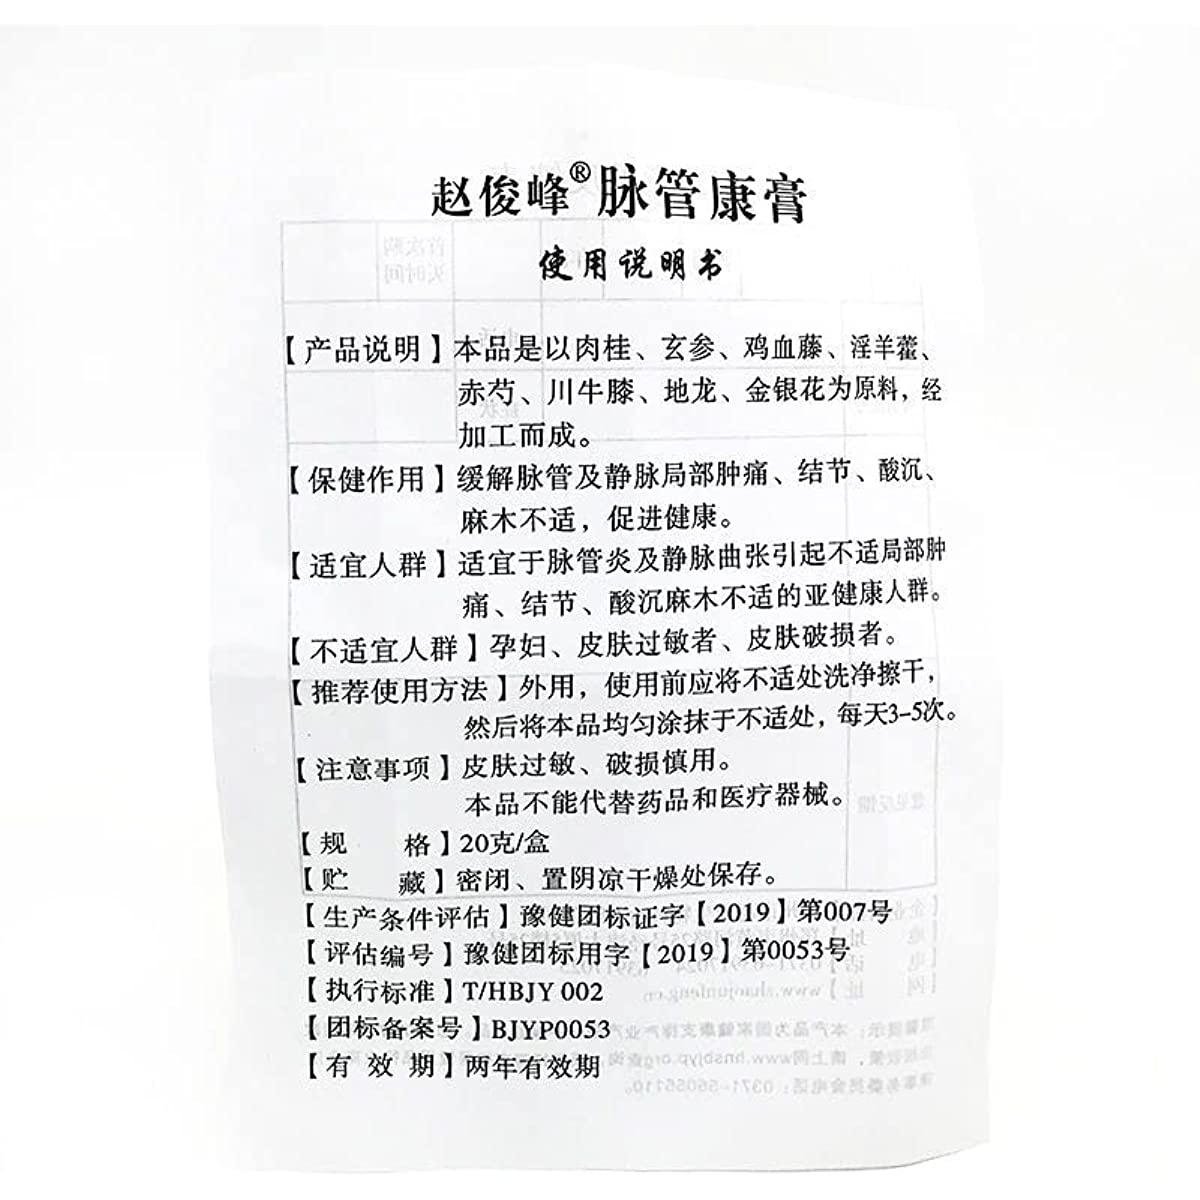 1 Box, Maiguankang Gao 20g/box 脉管康膏